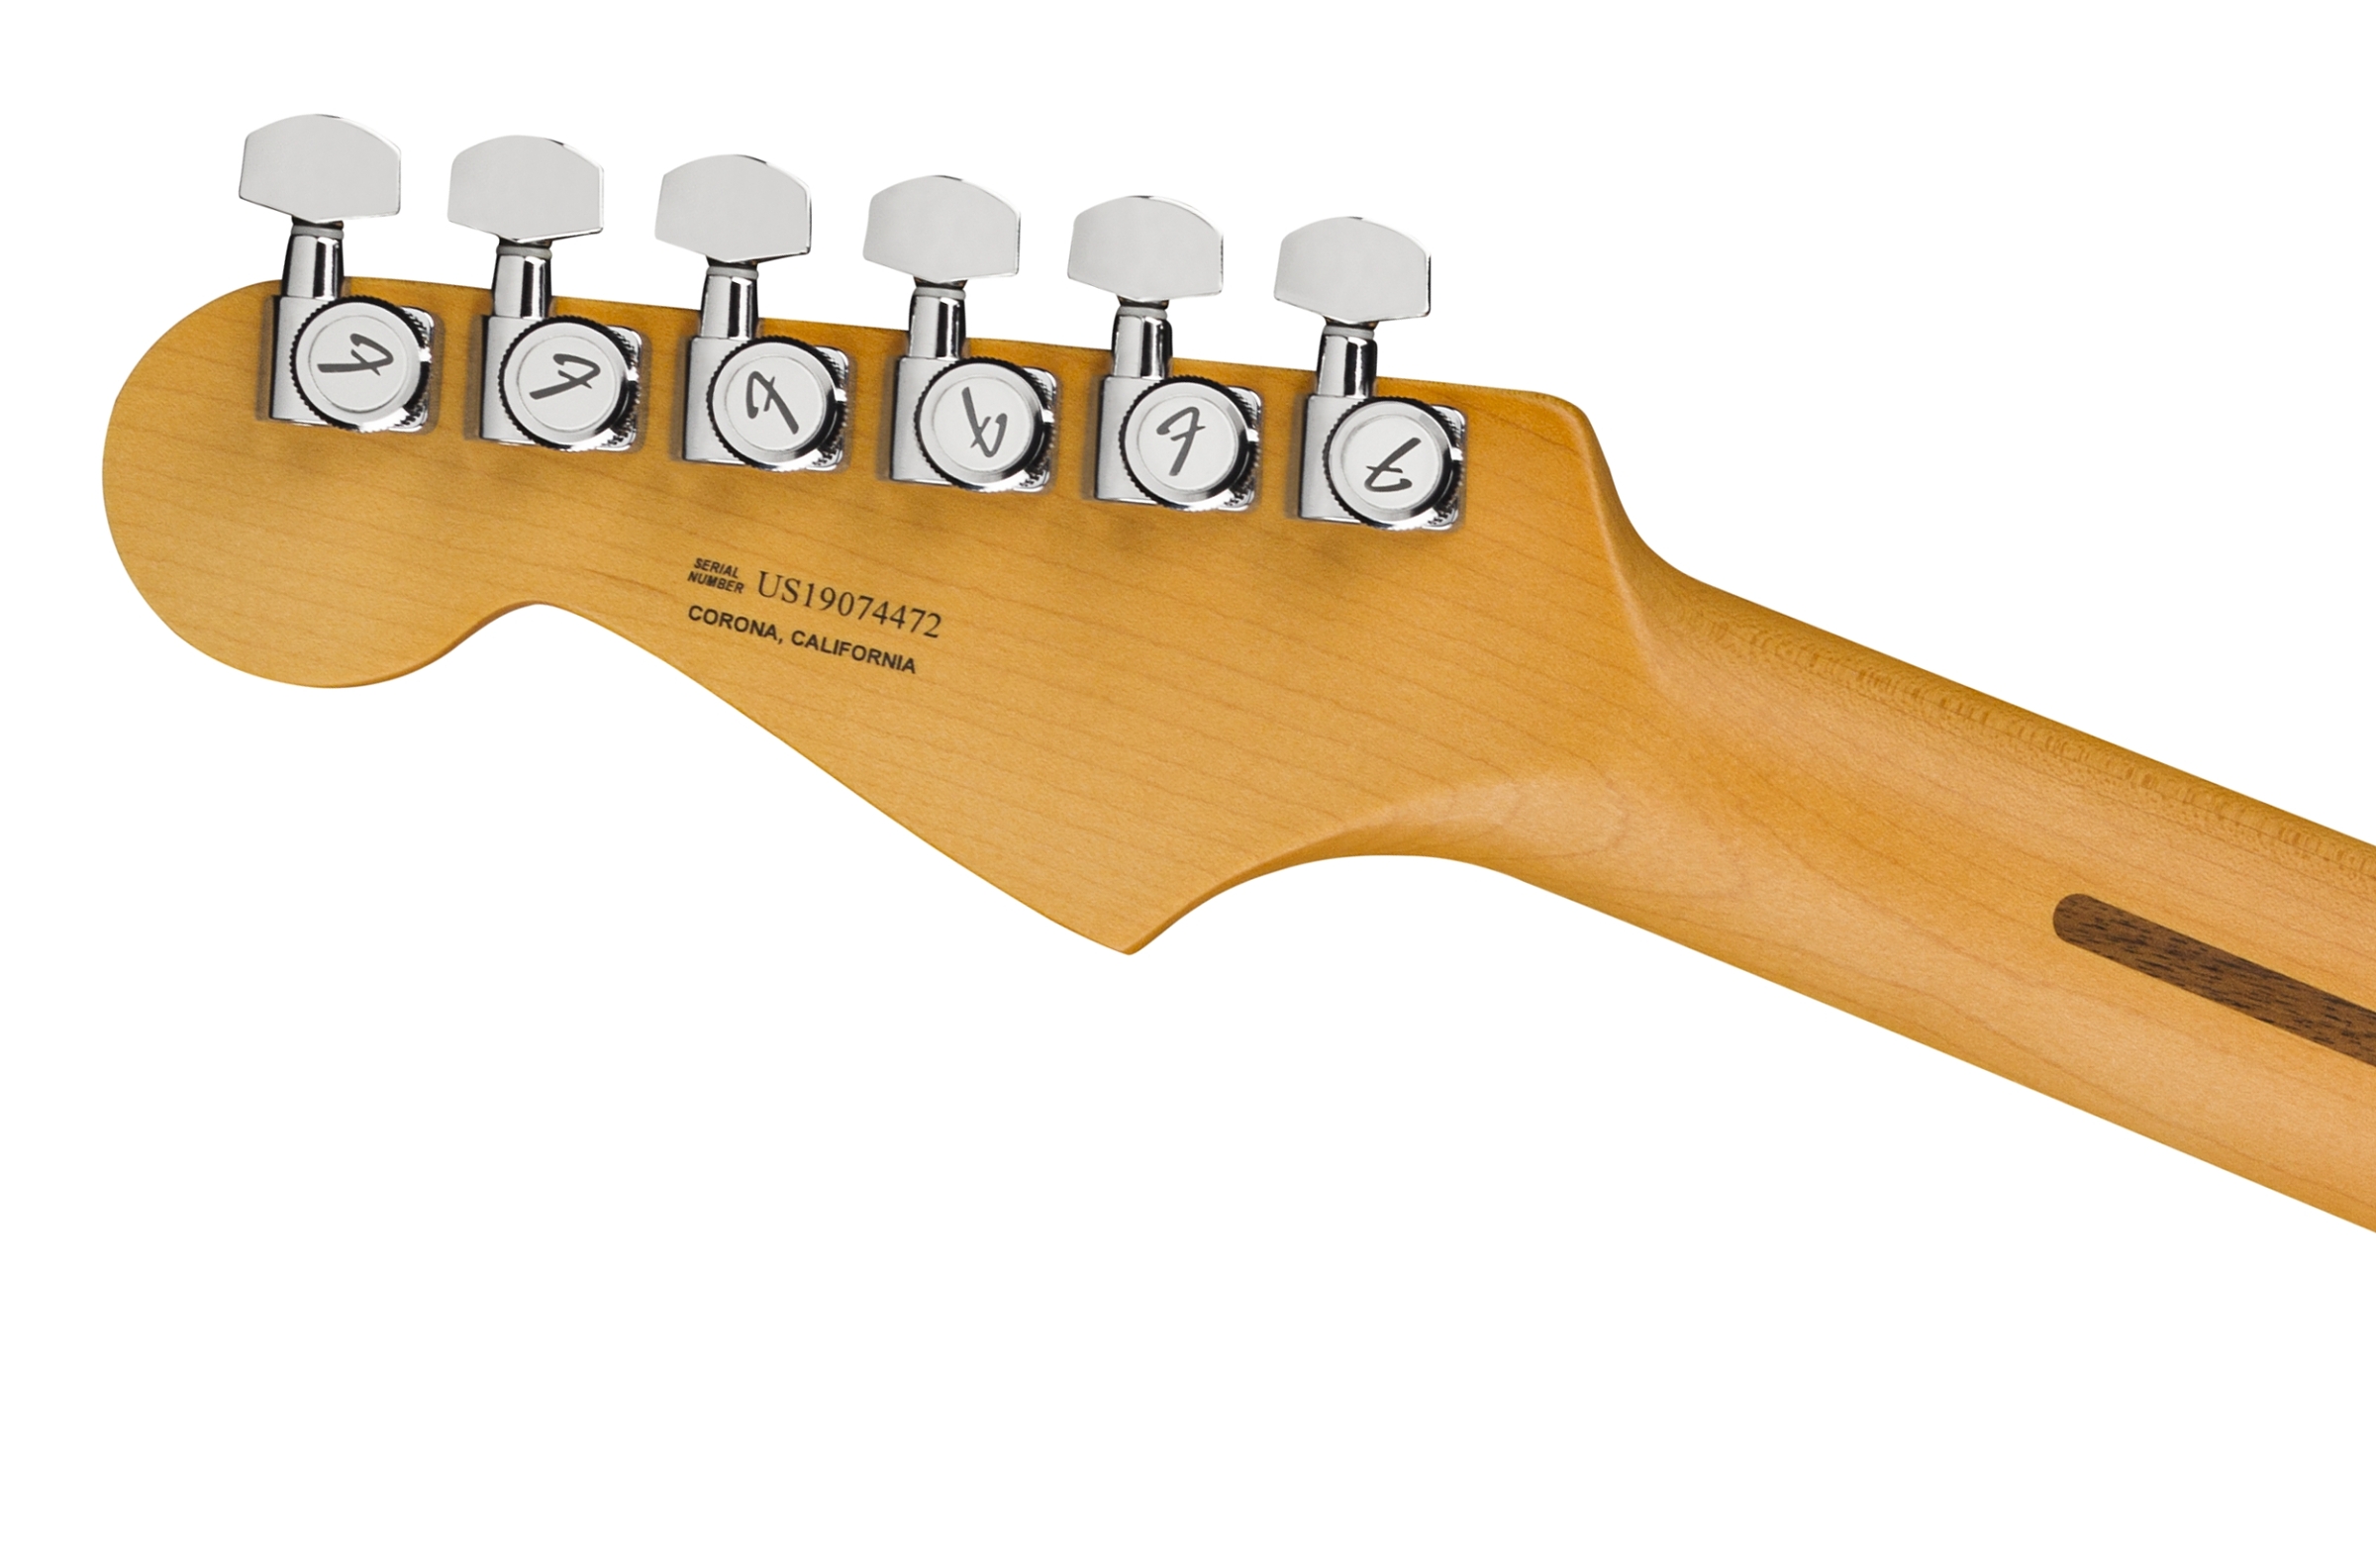 Fender American Ultra Stratocaster®, Maple Fingerboard, Mocha Burst